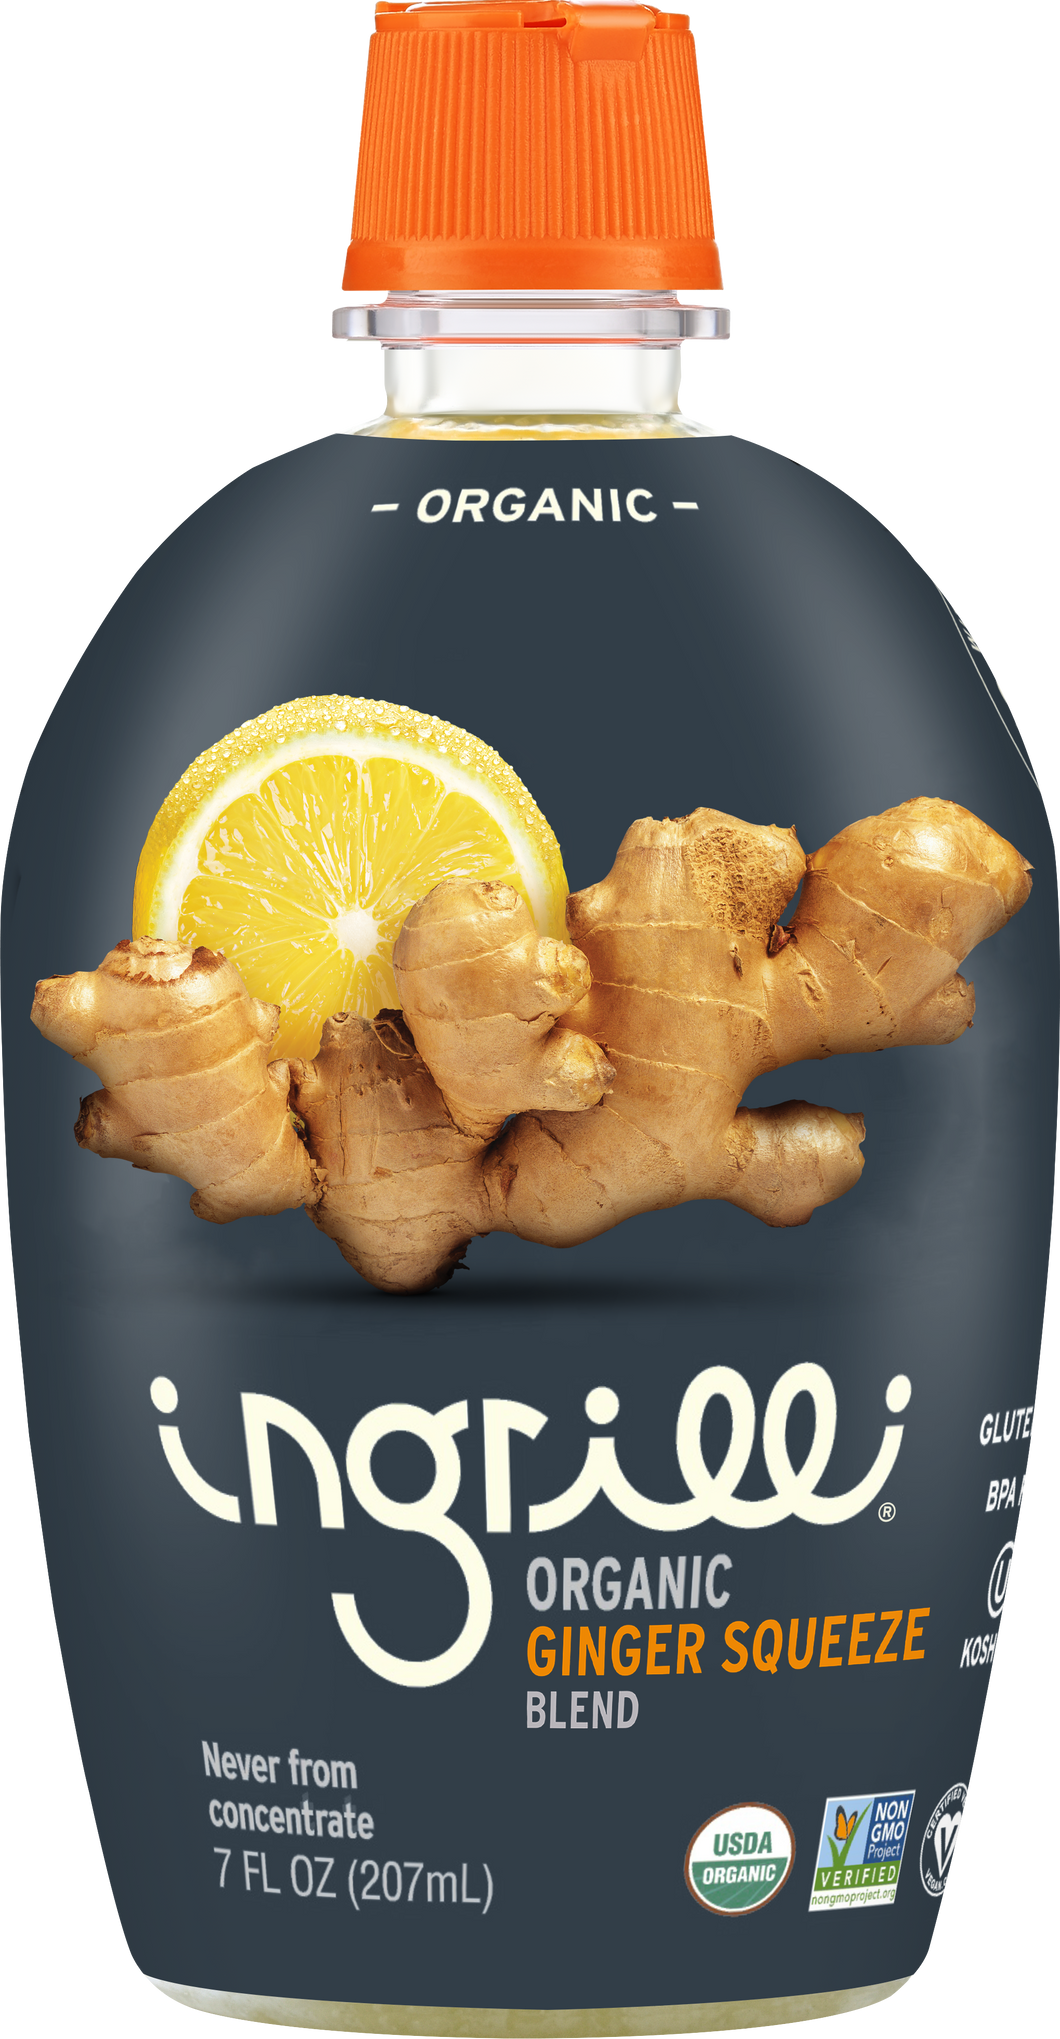 Ingrilli Organic Ginger Squeeze Blend, 7 Fl Oz - Multi Pack